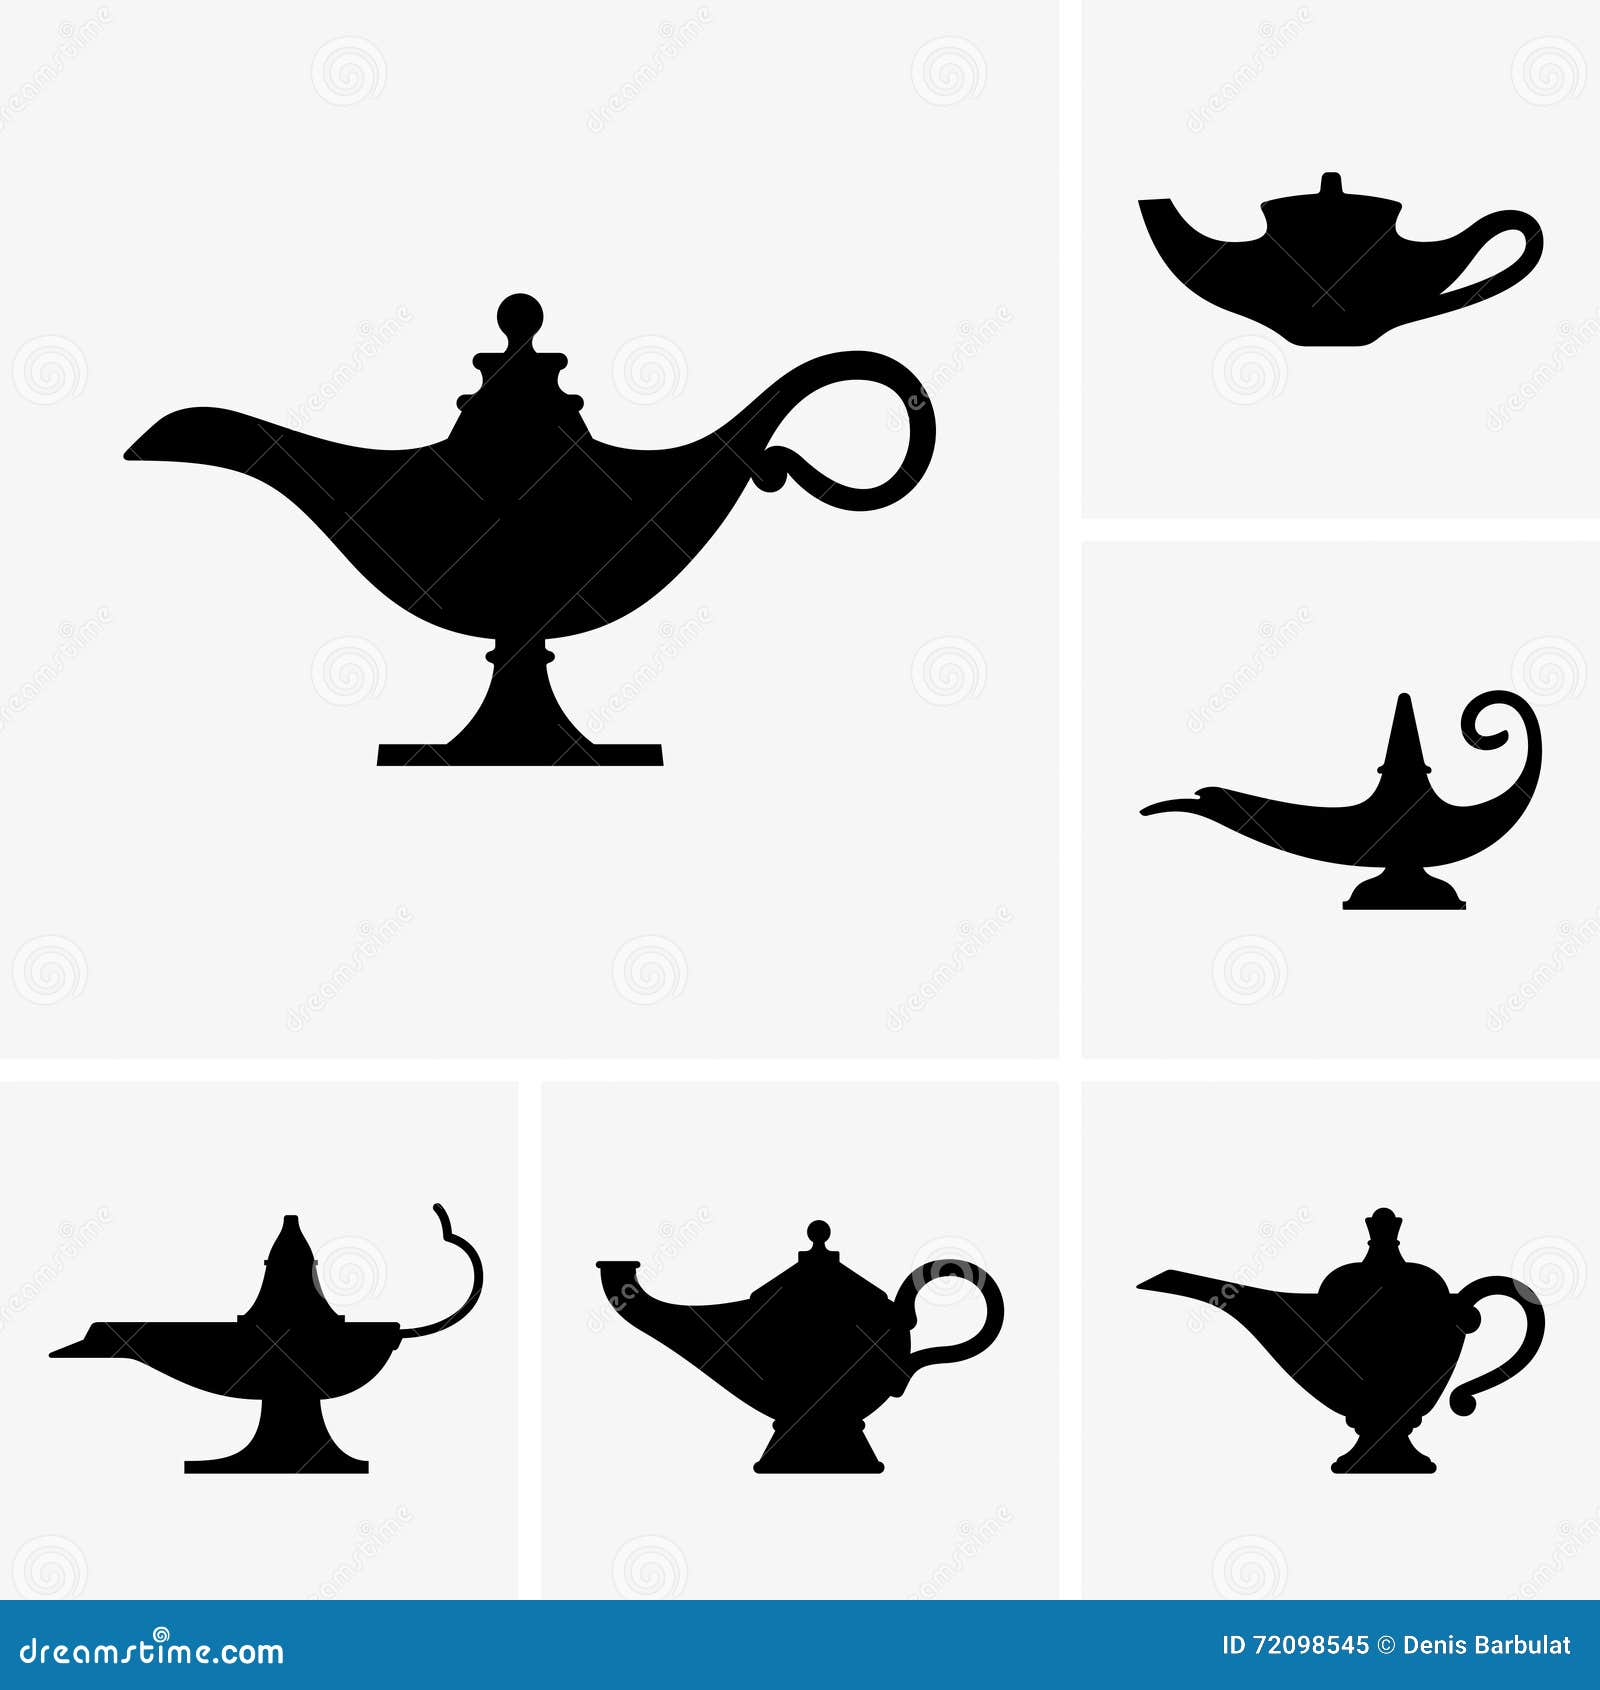 Aladdin lamps stock vector. Illustration of icon, lamp - 72098545